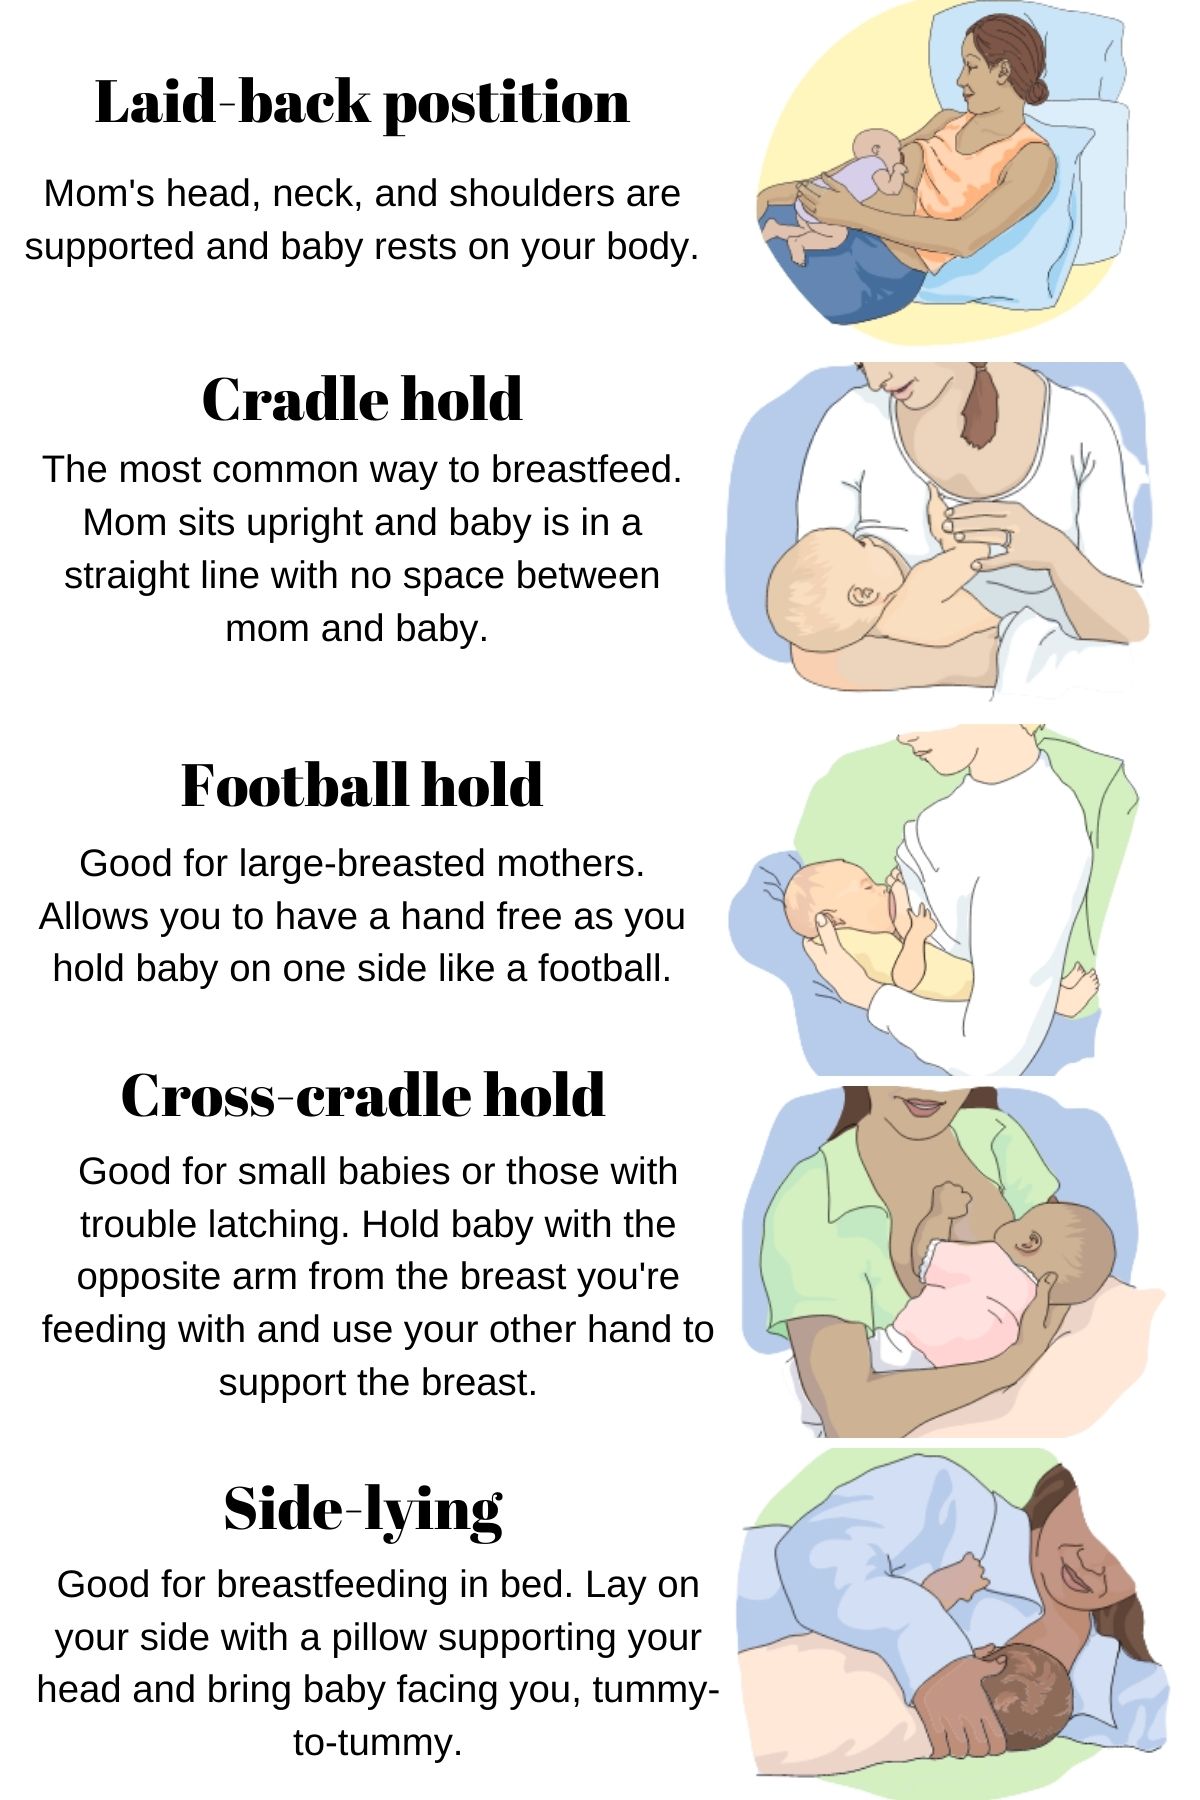 Graphic describing different breastfeeding positions.